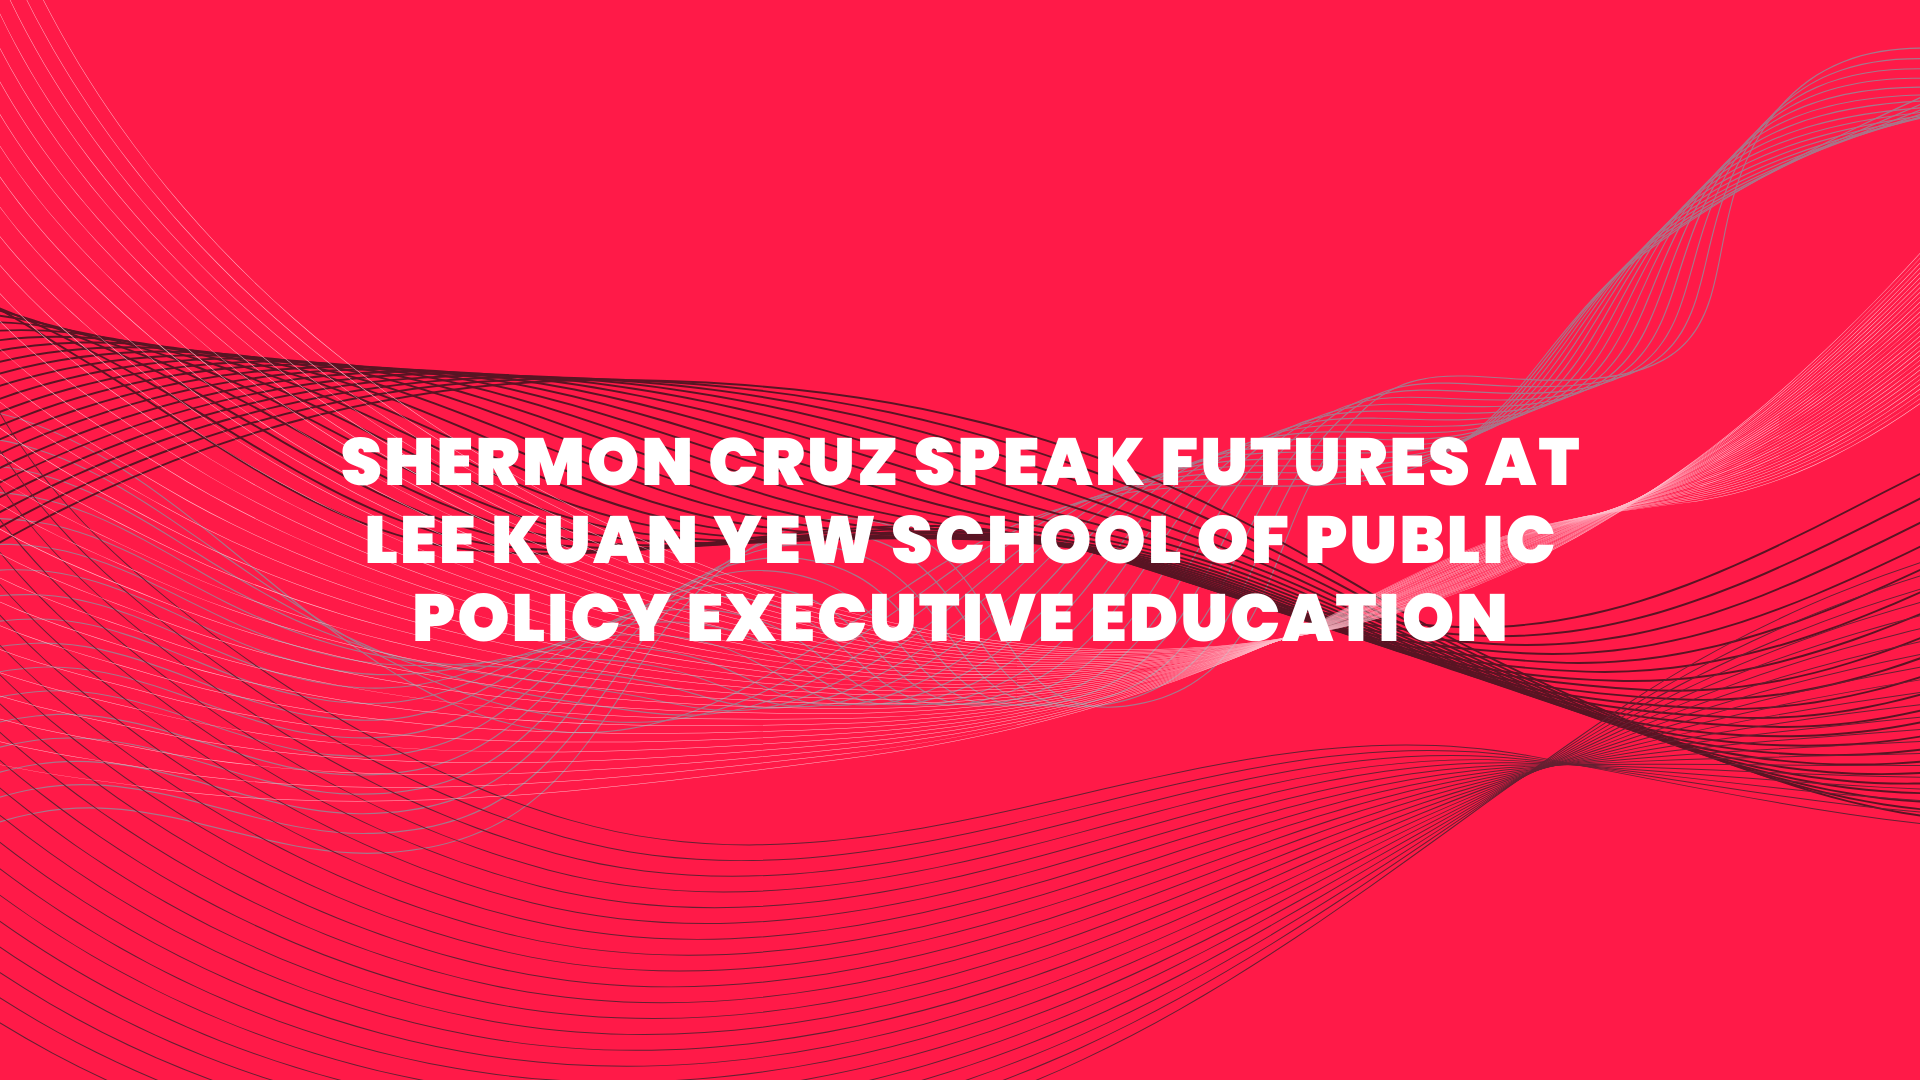 Shermon Cruz speak futures at Lee Kuan Yew School of Public Policy Executive Education